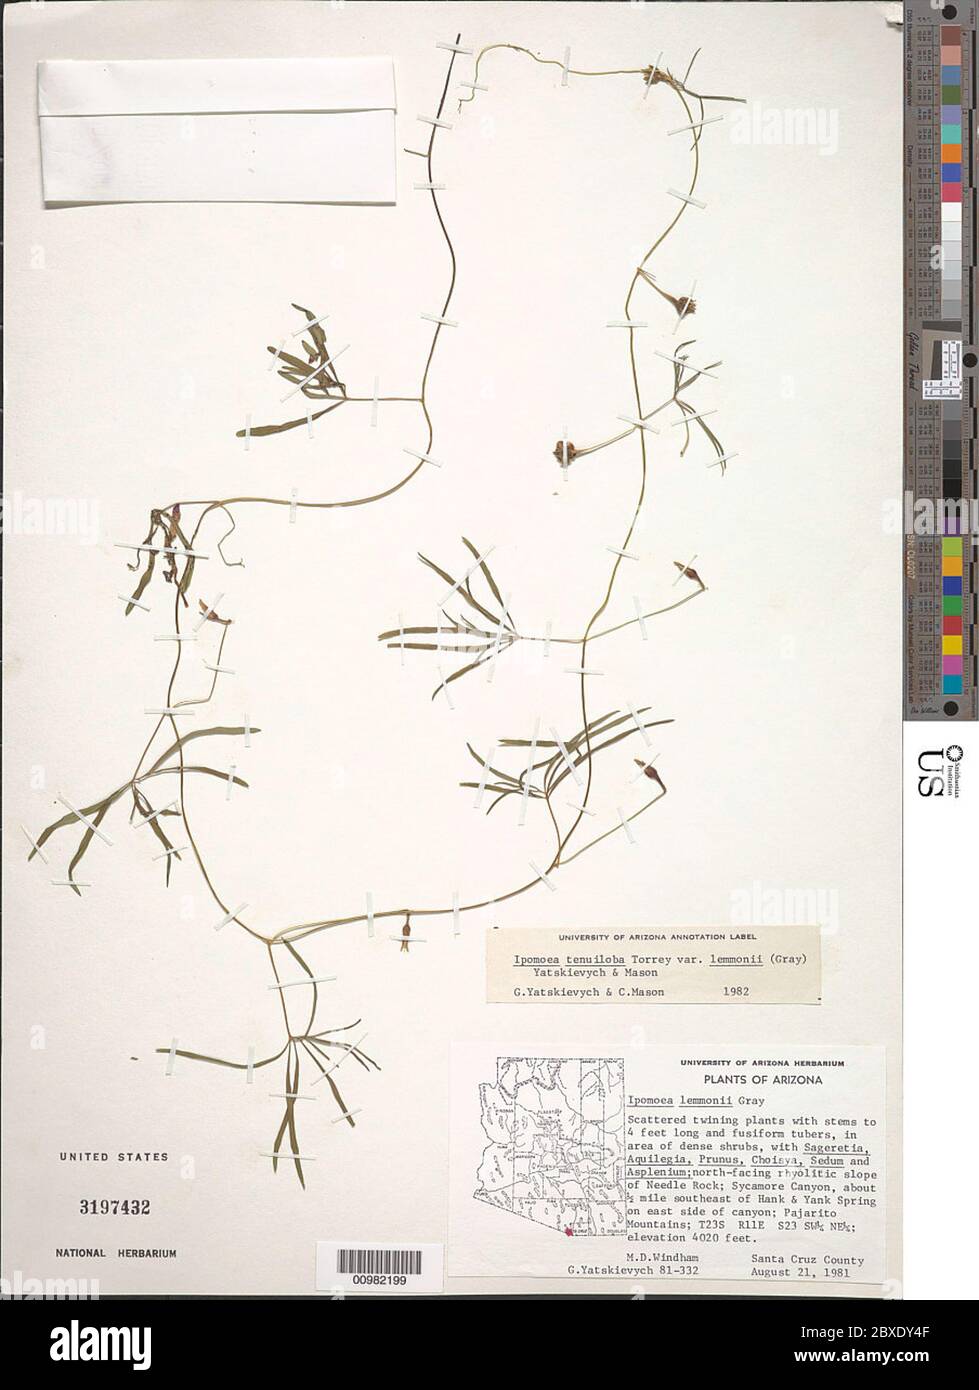 Ipomoea tenuiloba var lemmonii A Gray Yatsk CT Mason Ipomoea tenuiloba var lemmonii A Gray Yatsk CT Mason. Stock Photo